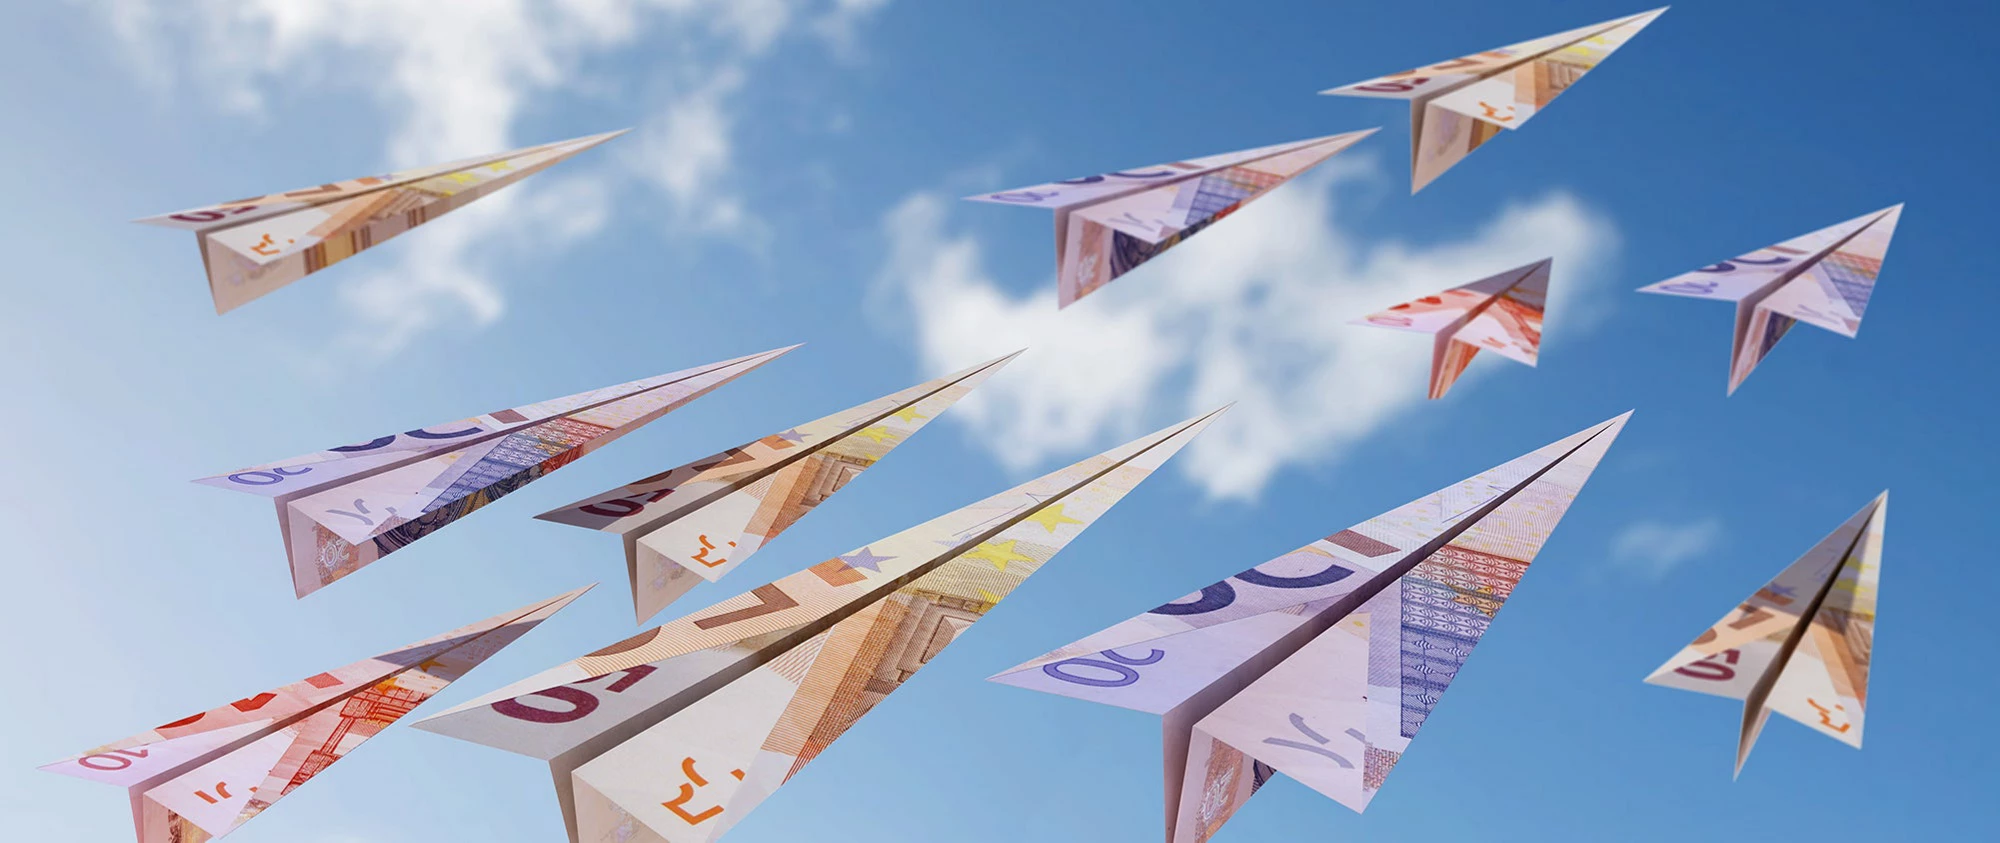 Flying paper money planes. | © shutterstock.com